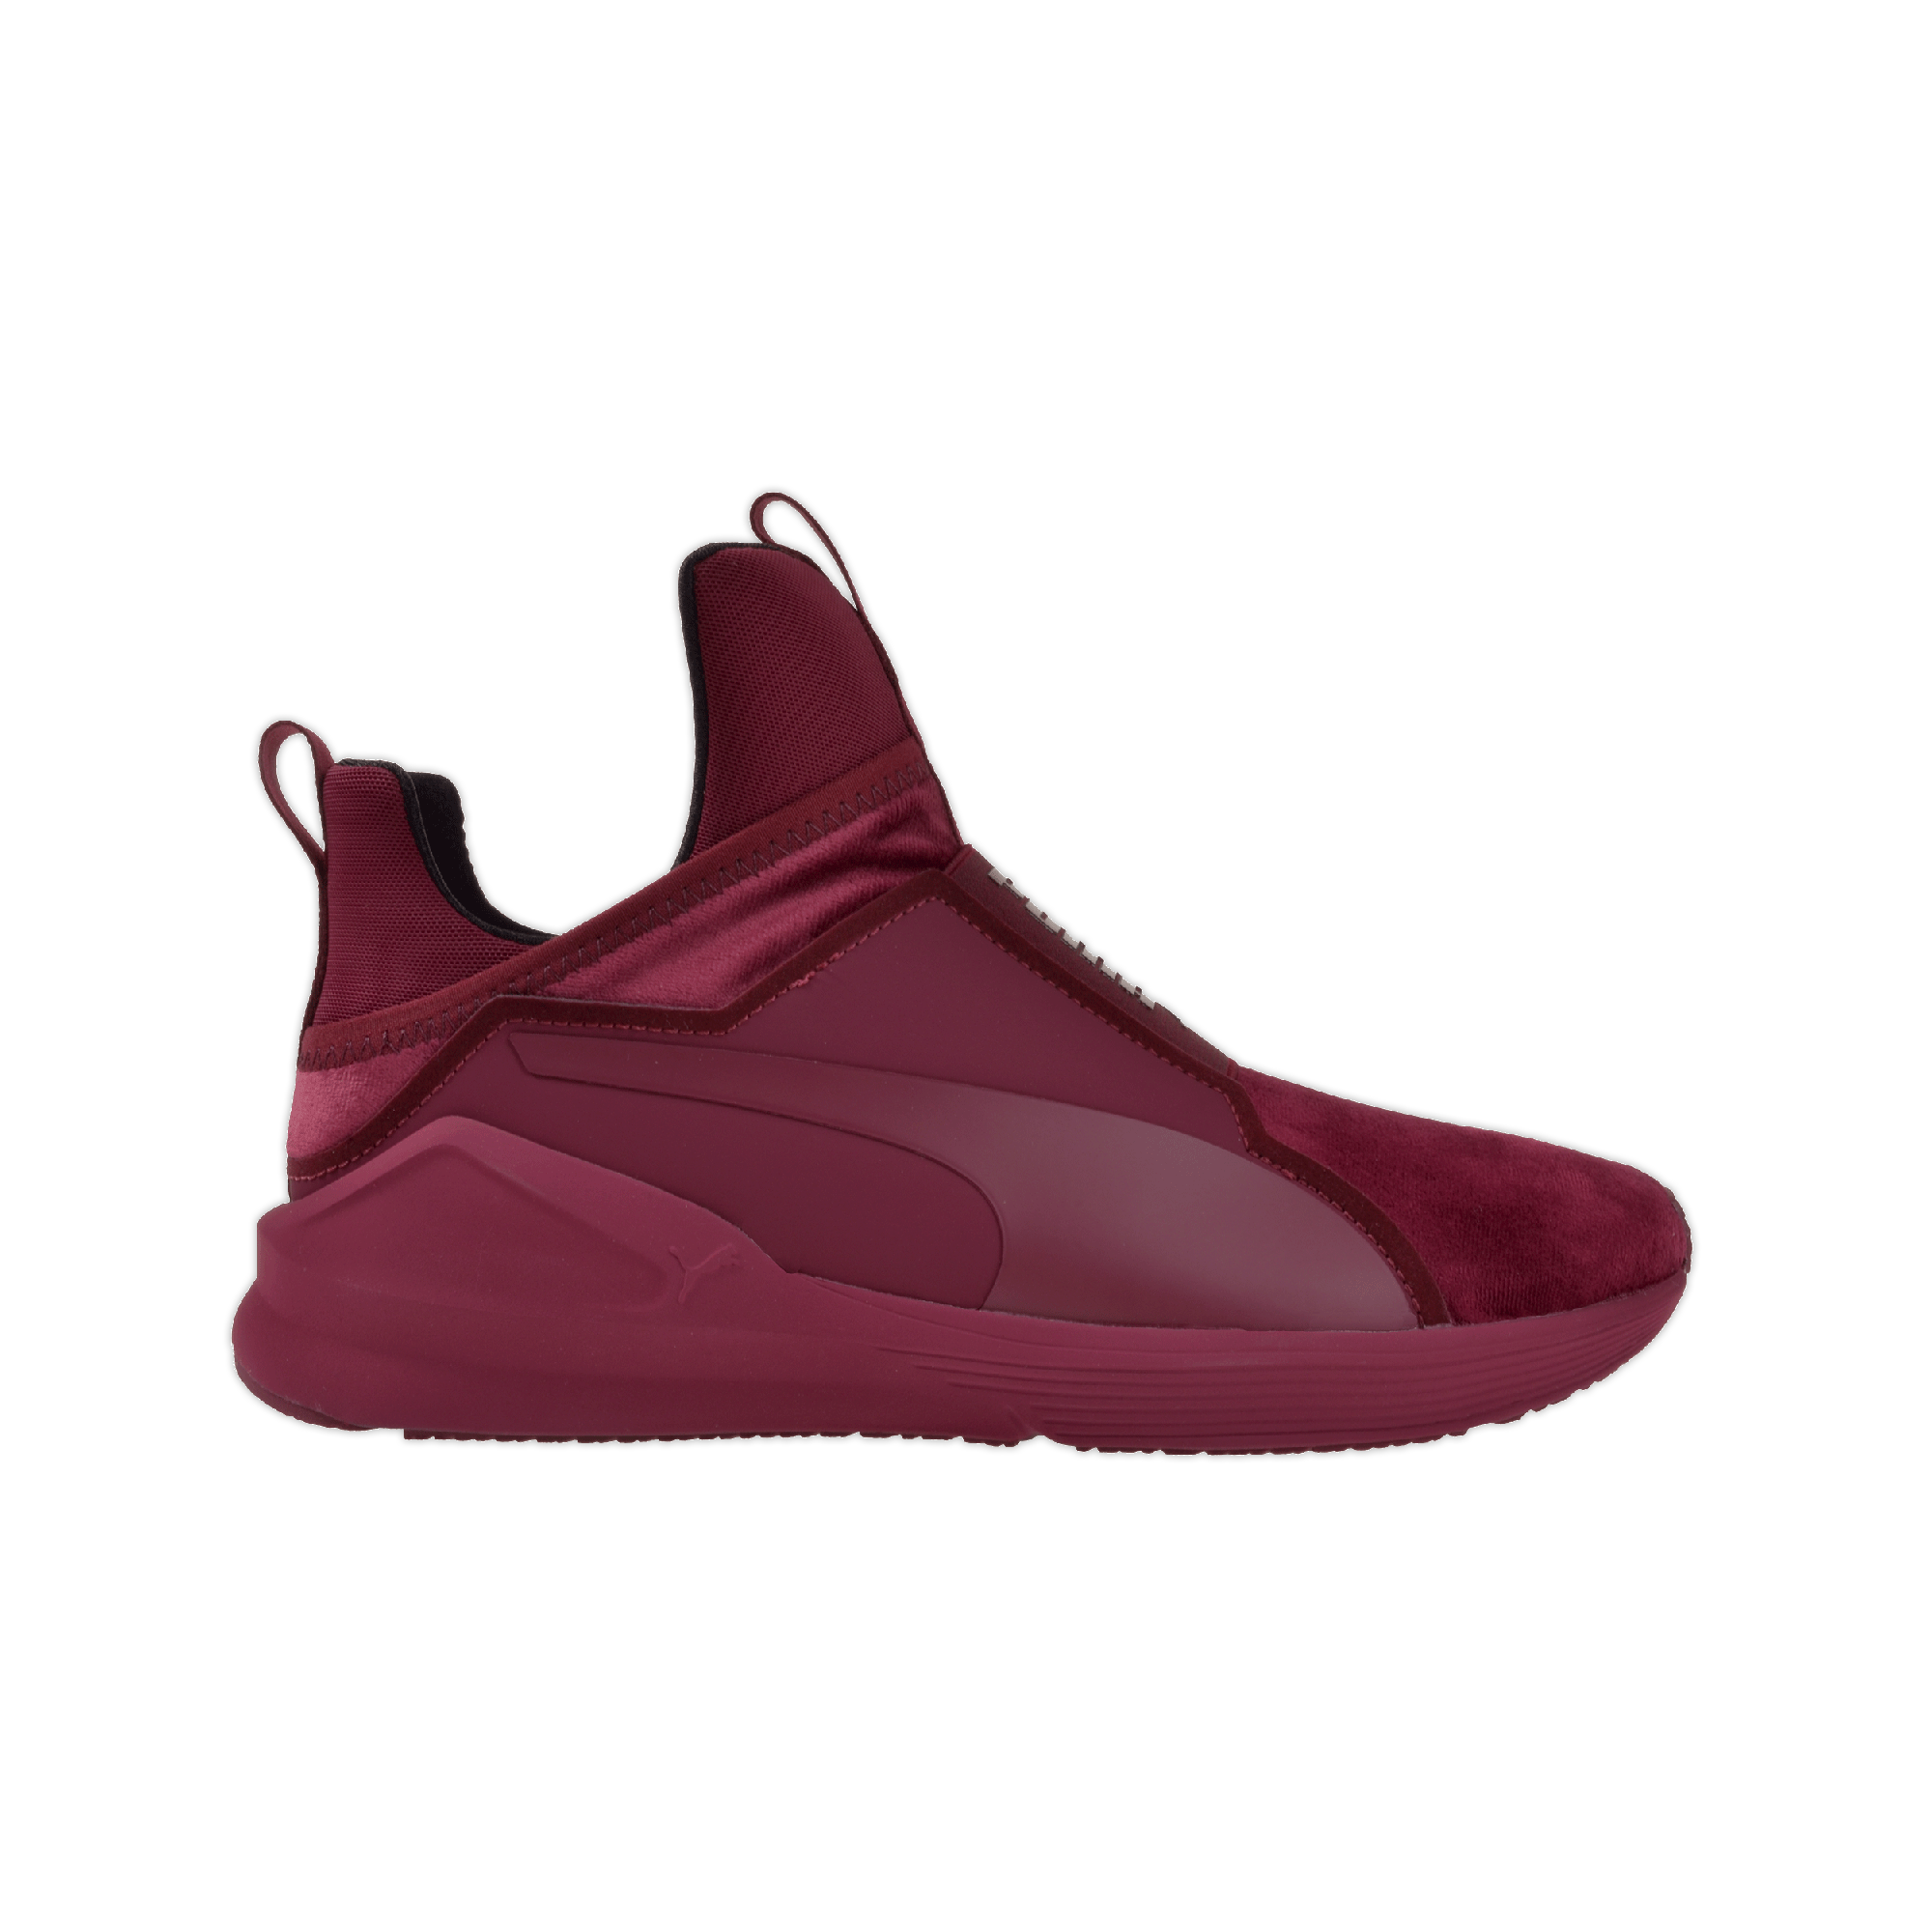 puma burgundy shoes